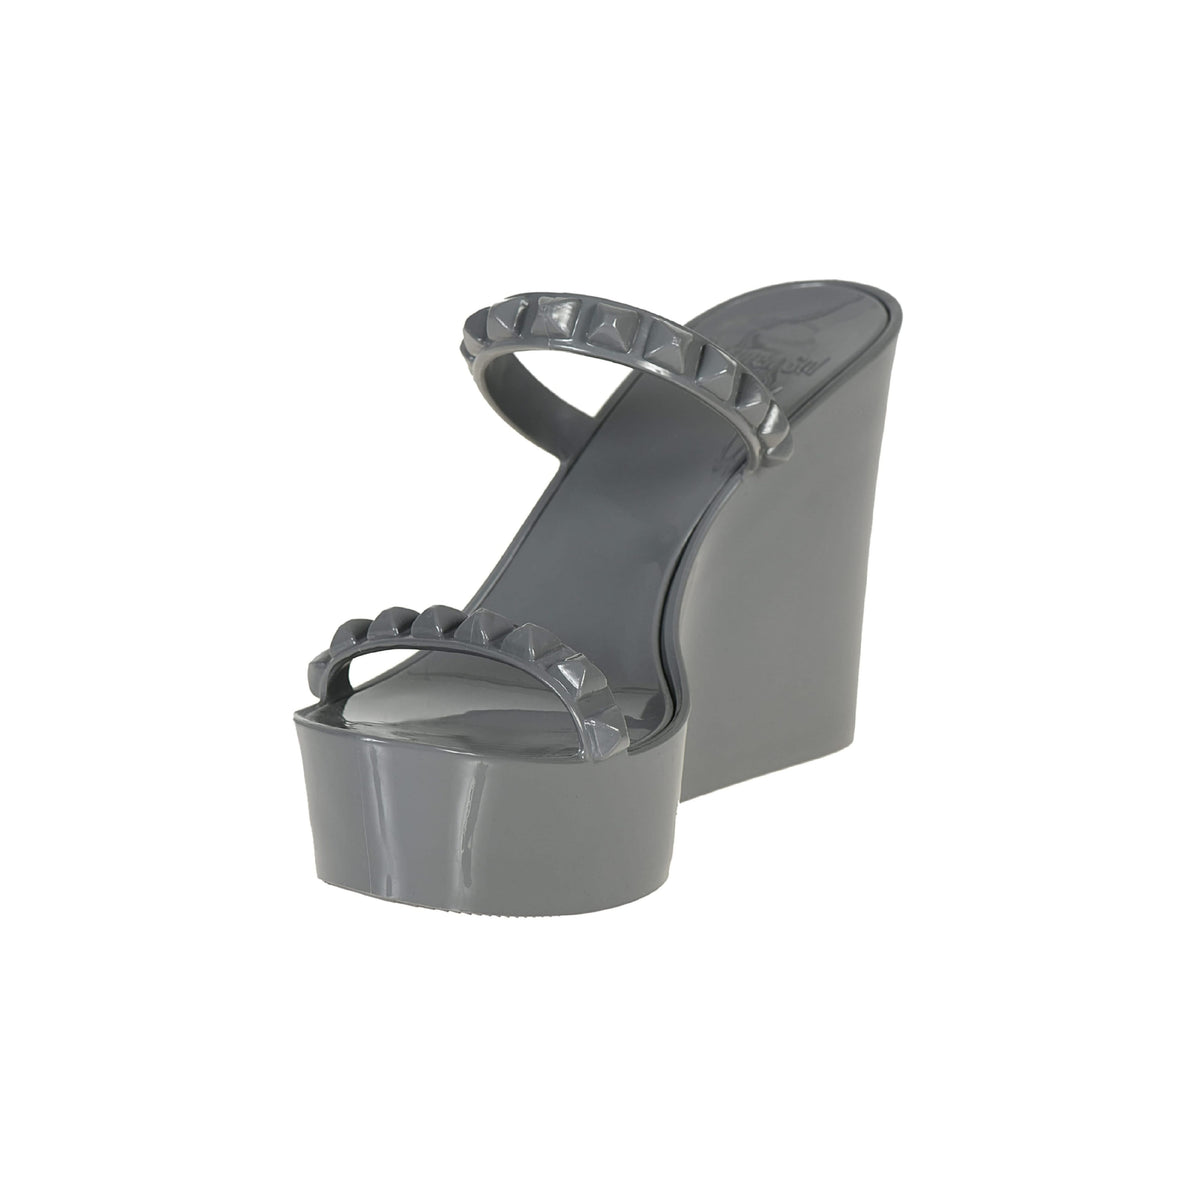 Recyclable Carmen Sol jelly heels in color grey on sale